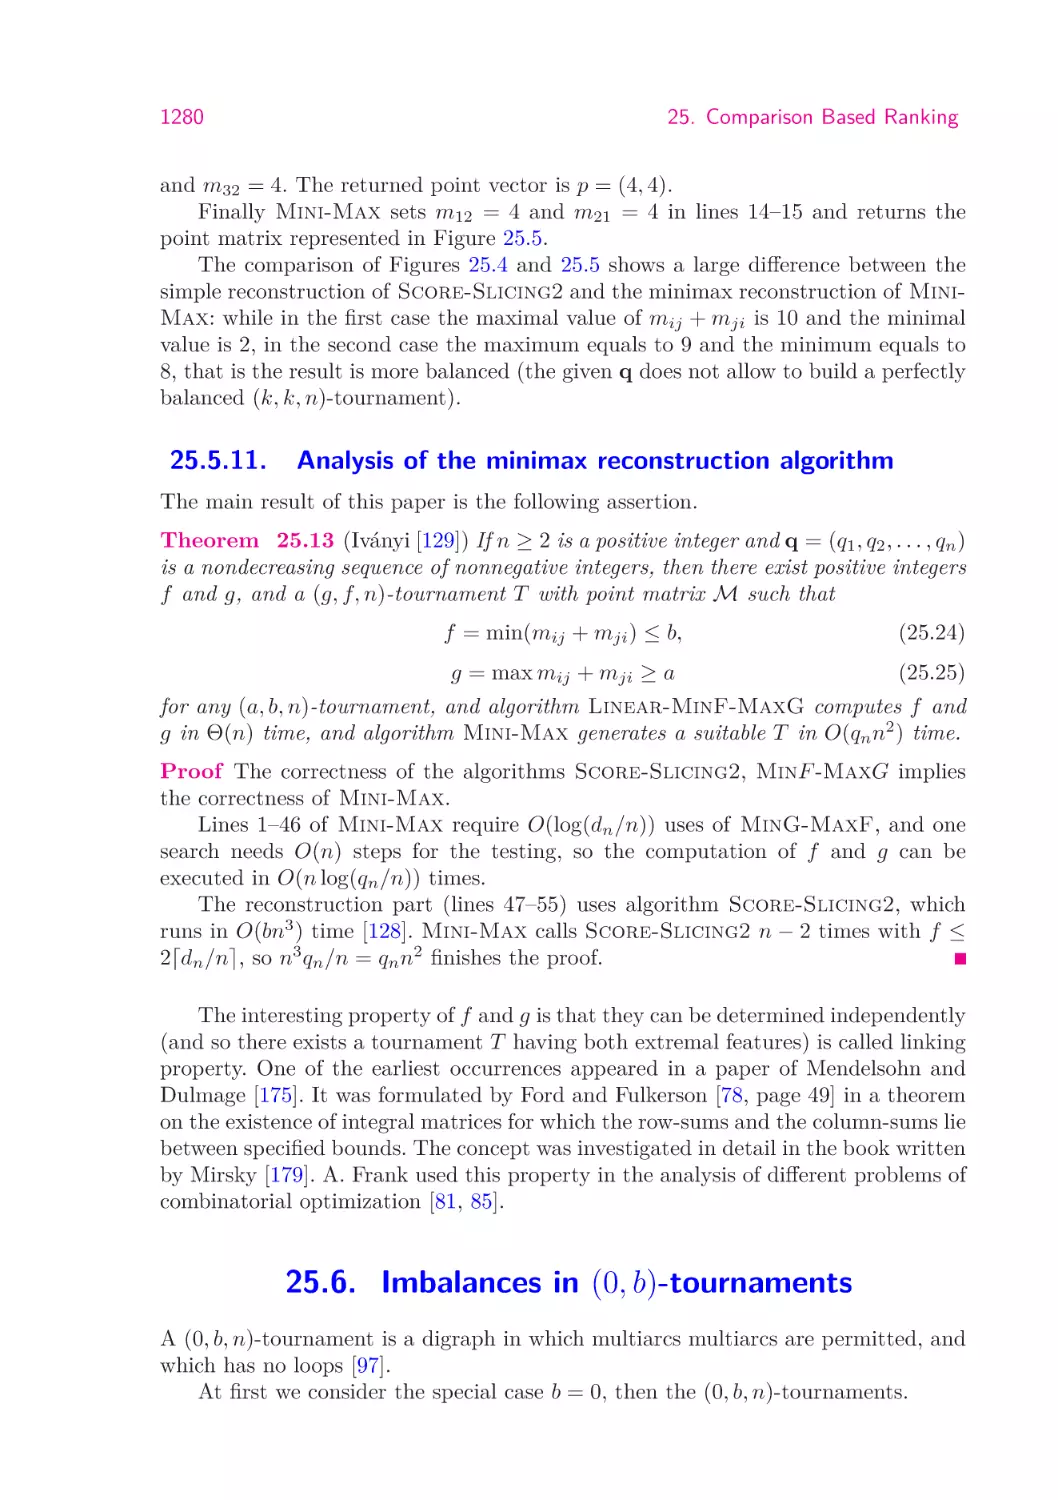 25.5.11.   Analysis of the minimax reconstruction algorithm
25.6.  Imbalances in (0,b)-tournaments